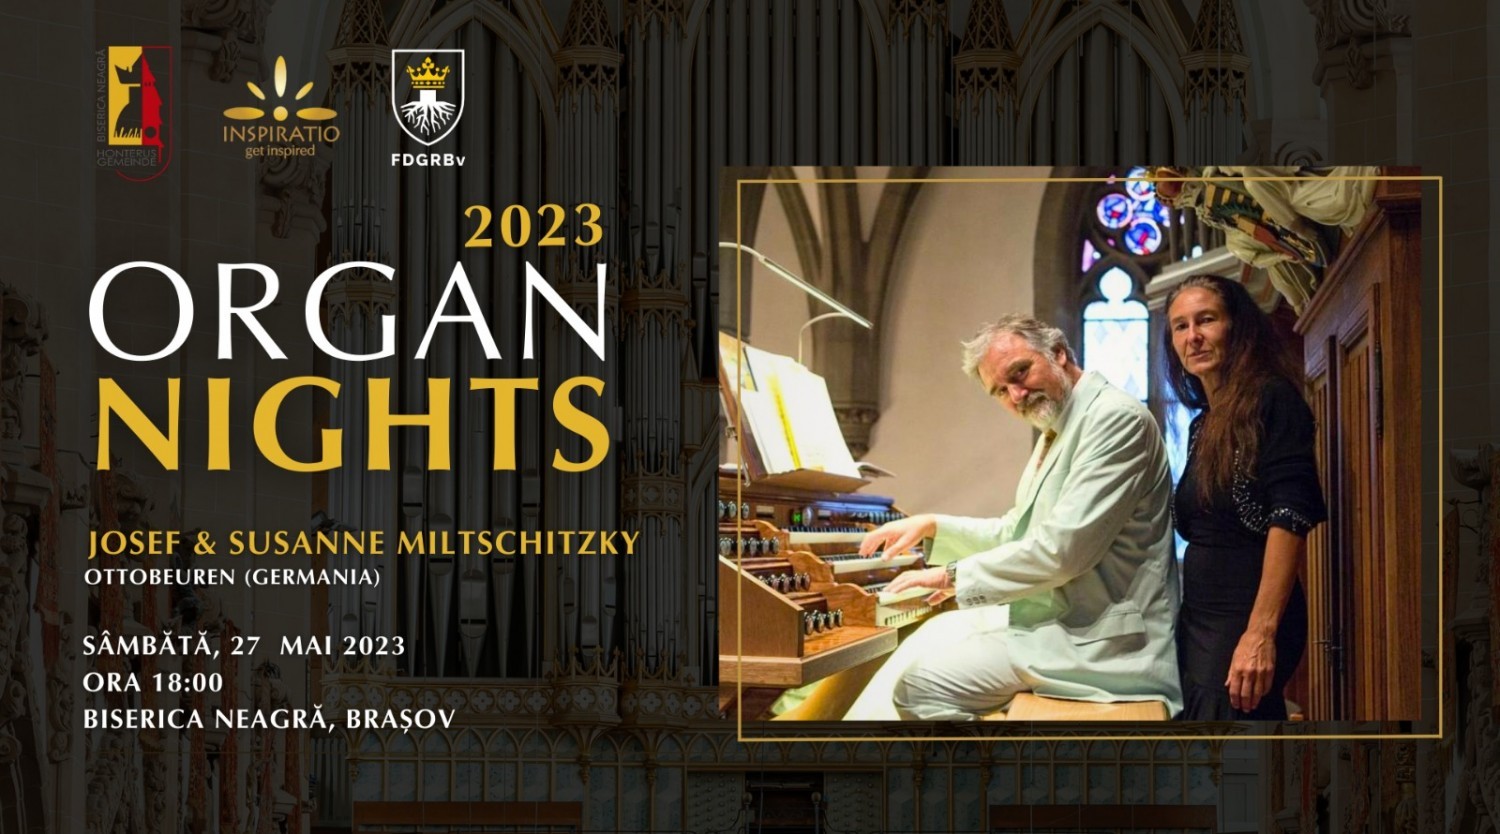 Organ Nights - Josef & Susanne Miltschitzky Ottobeuren la Biserica Neagră